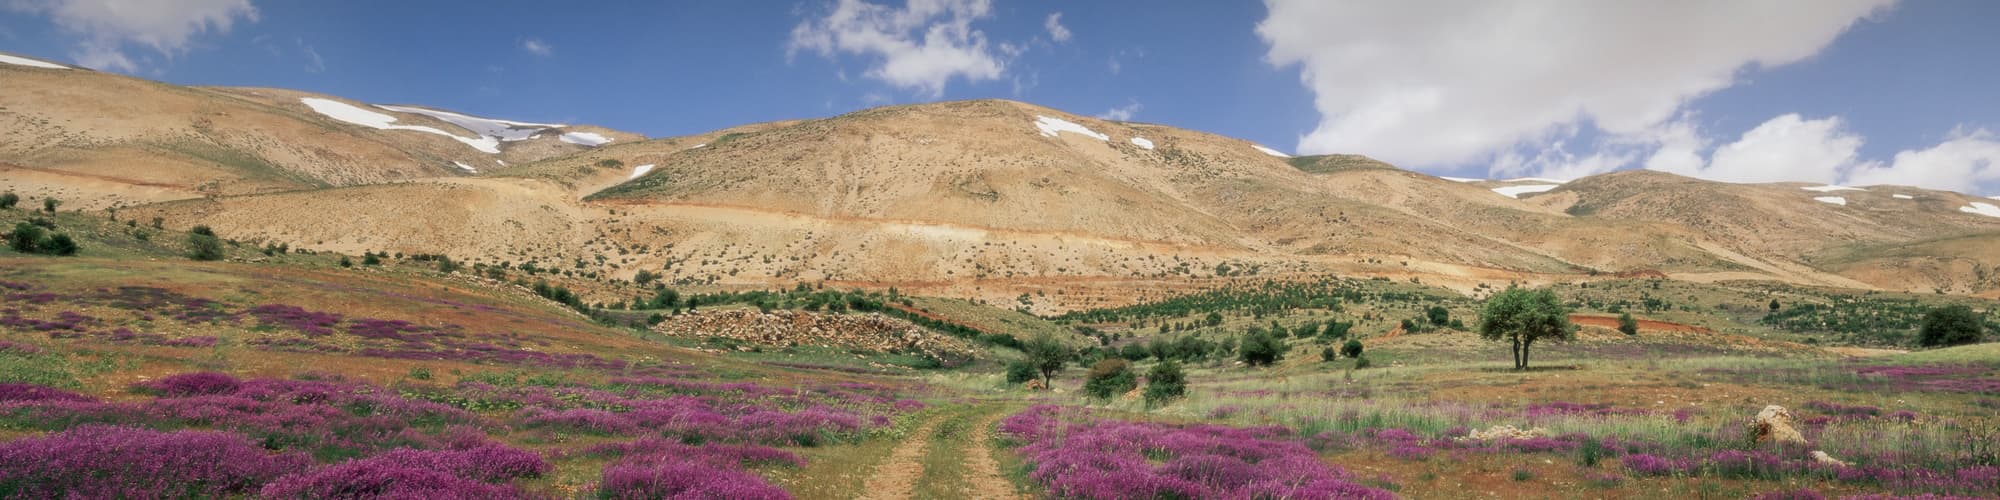 Trek Liban © robertharding / Adobe Stock